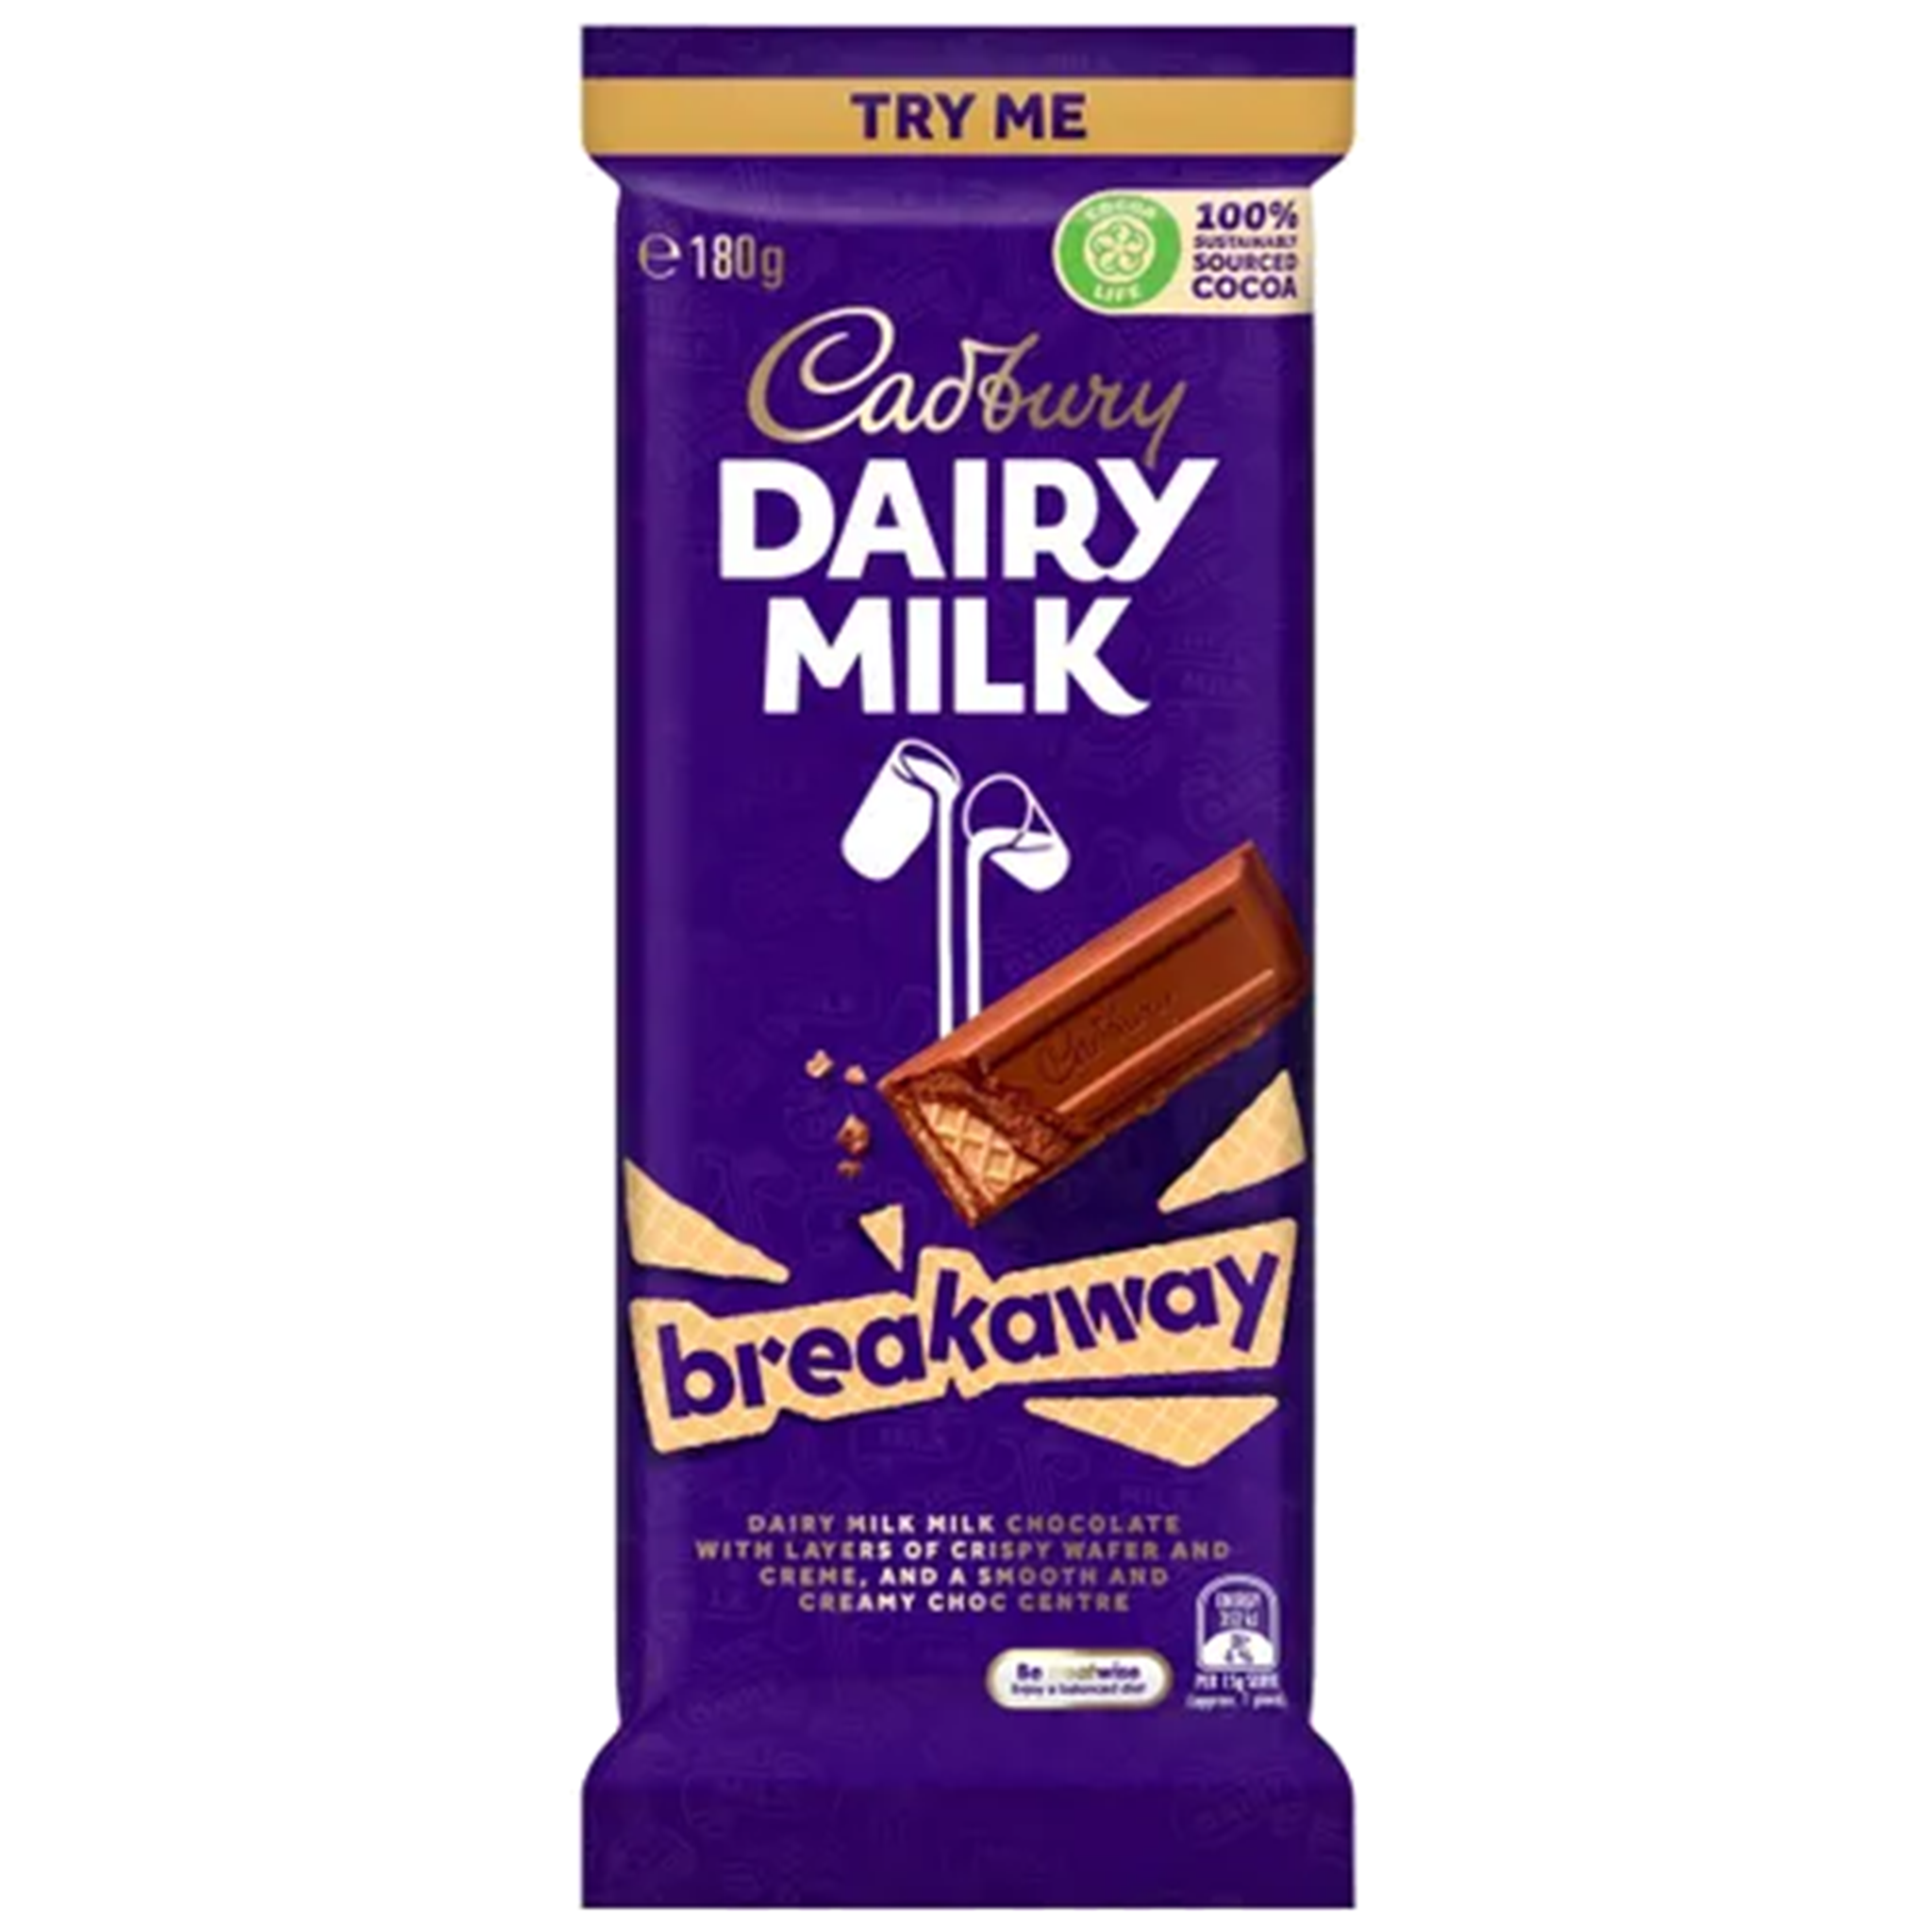 Cadbury Breakaway - Australia